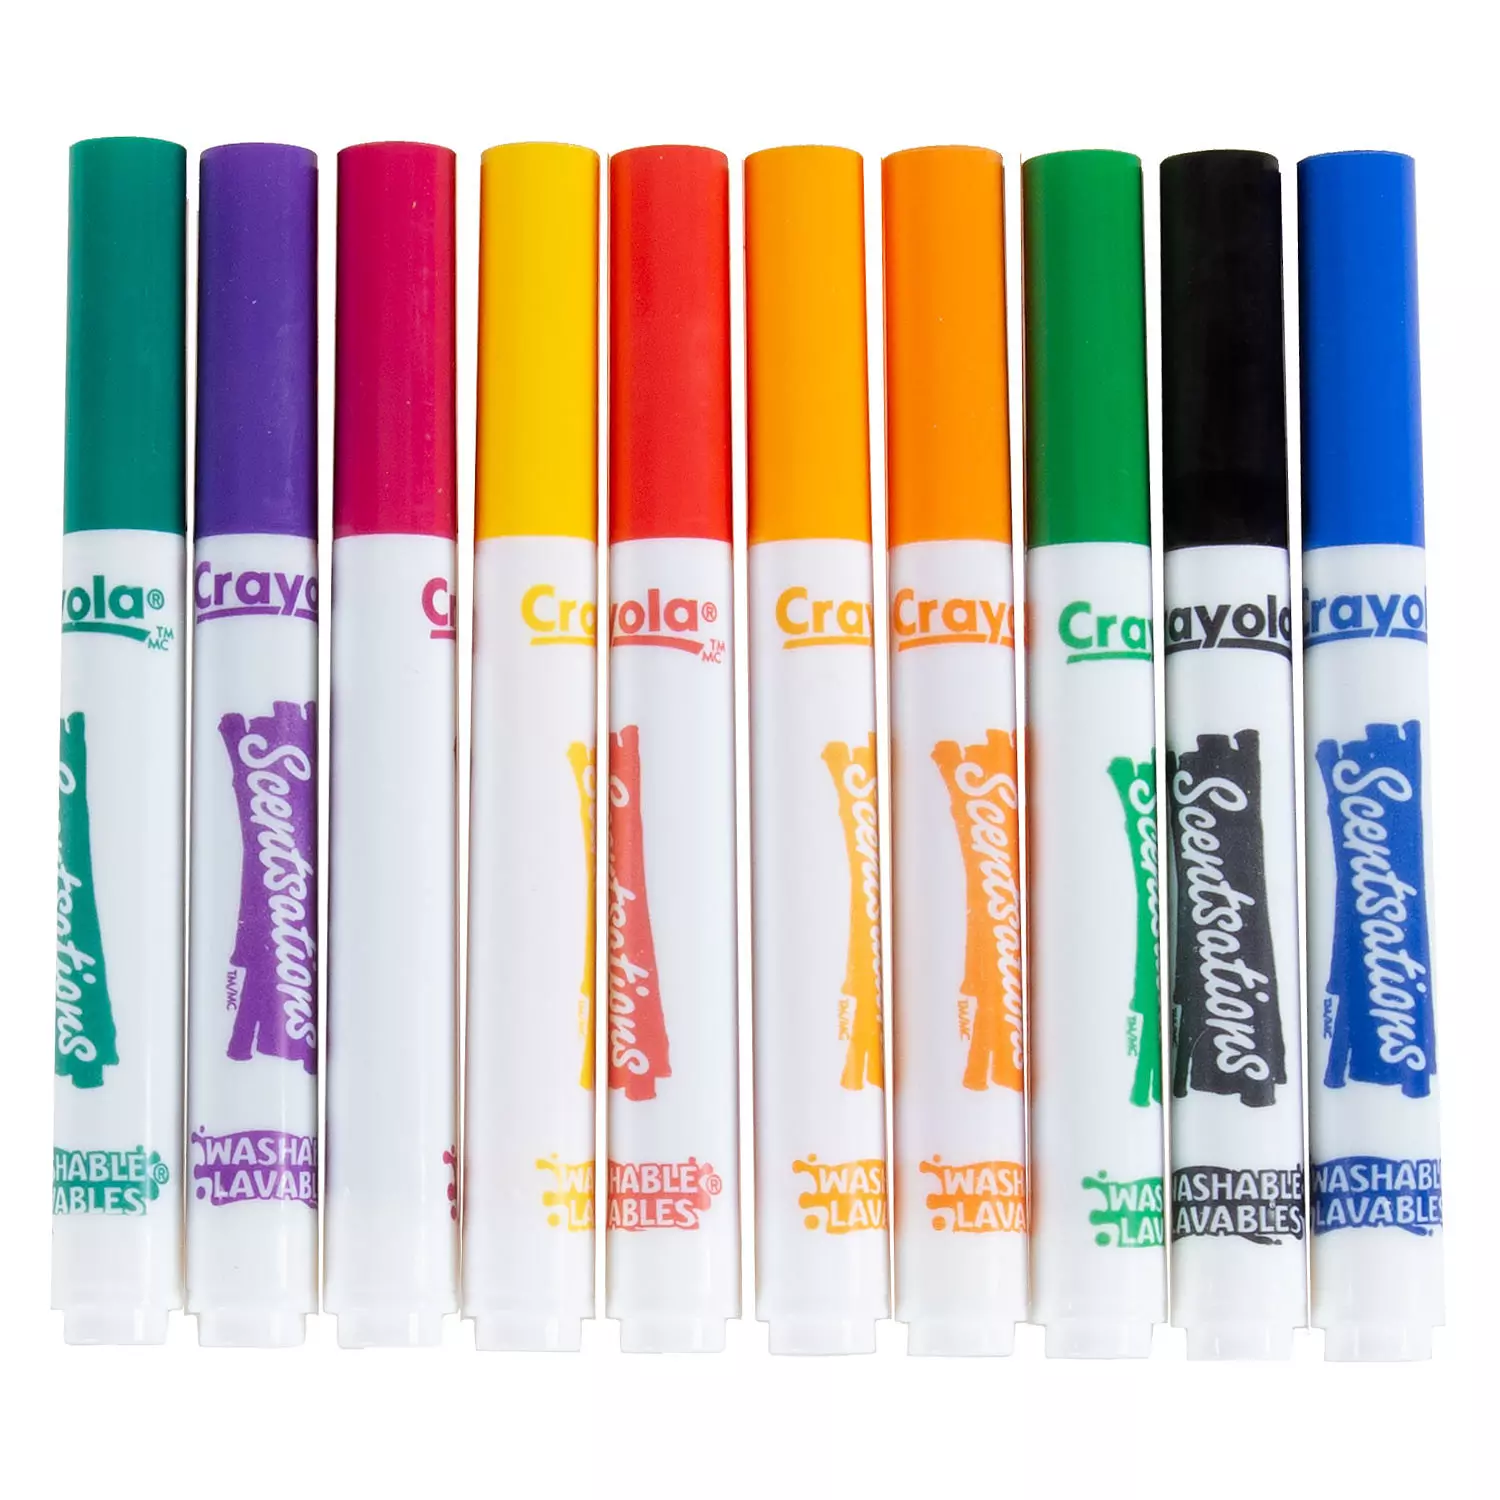 Crayola - 10 marqueurs parfumés, Fr